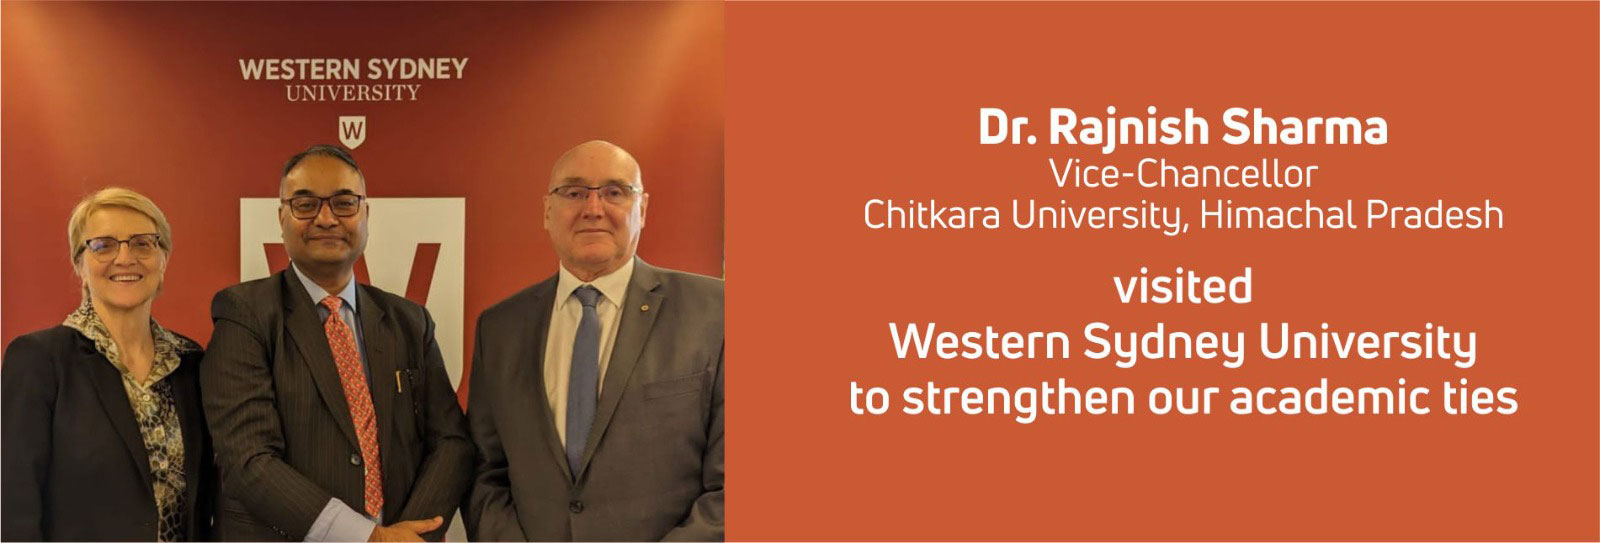 chitkara-university-and-western-sydney-university-strengthen-bonds-for-global-academic